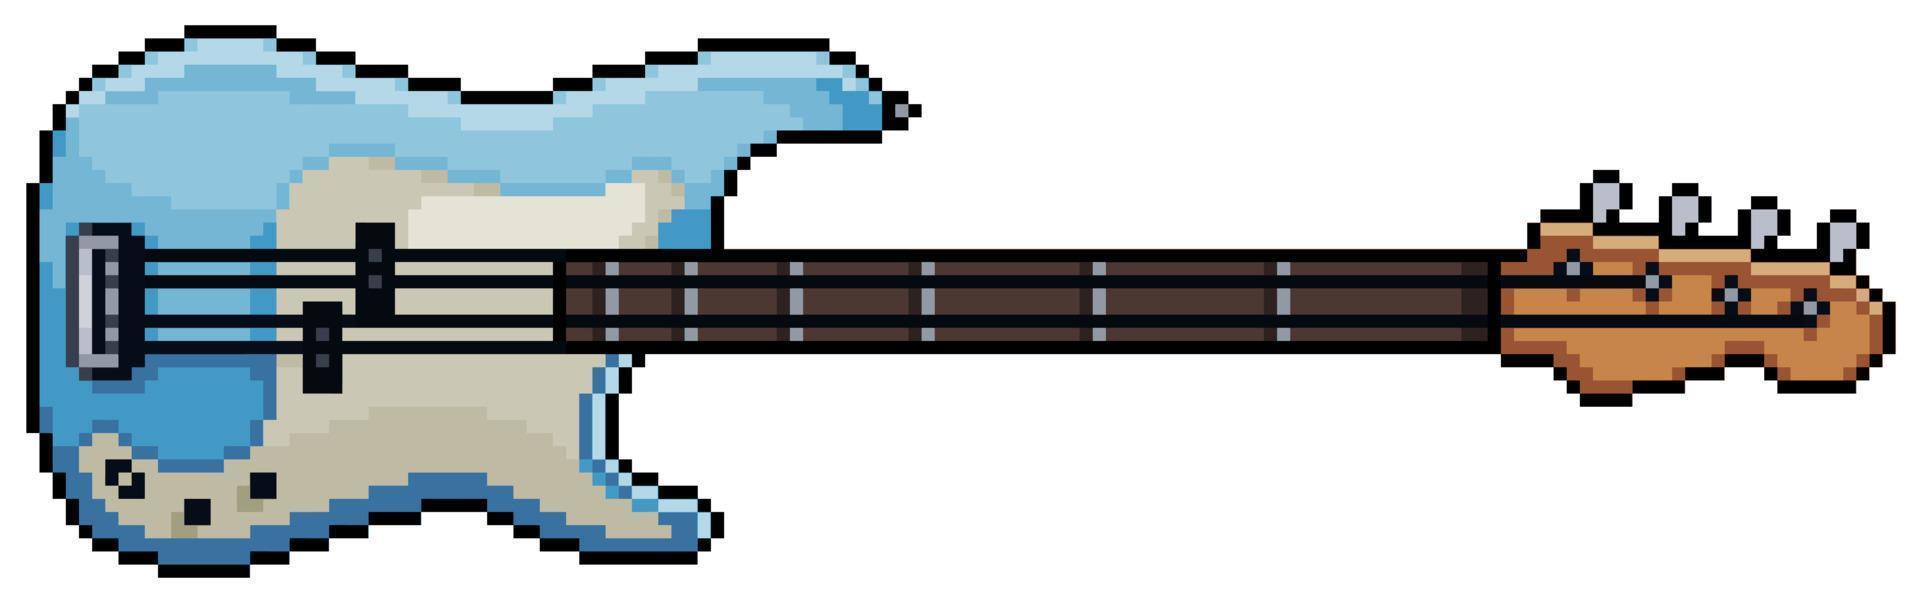 pixel art gitarr musikinstrument. 8-bitars spelobjekt på vit bakgrund vektor